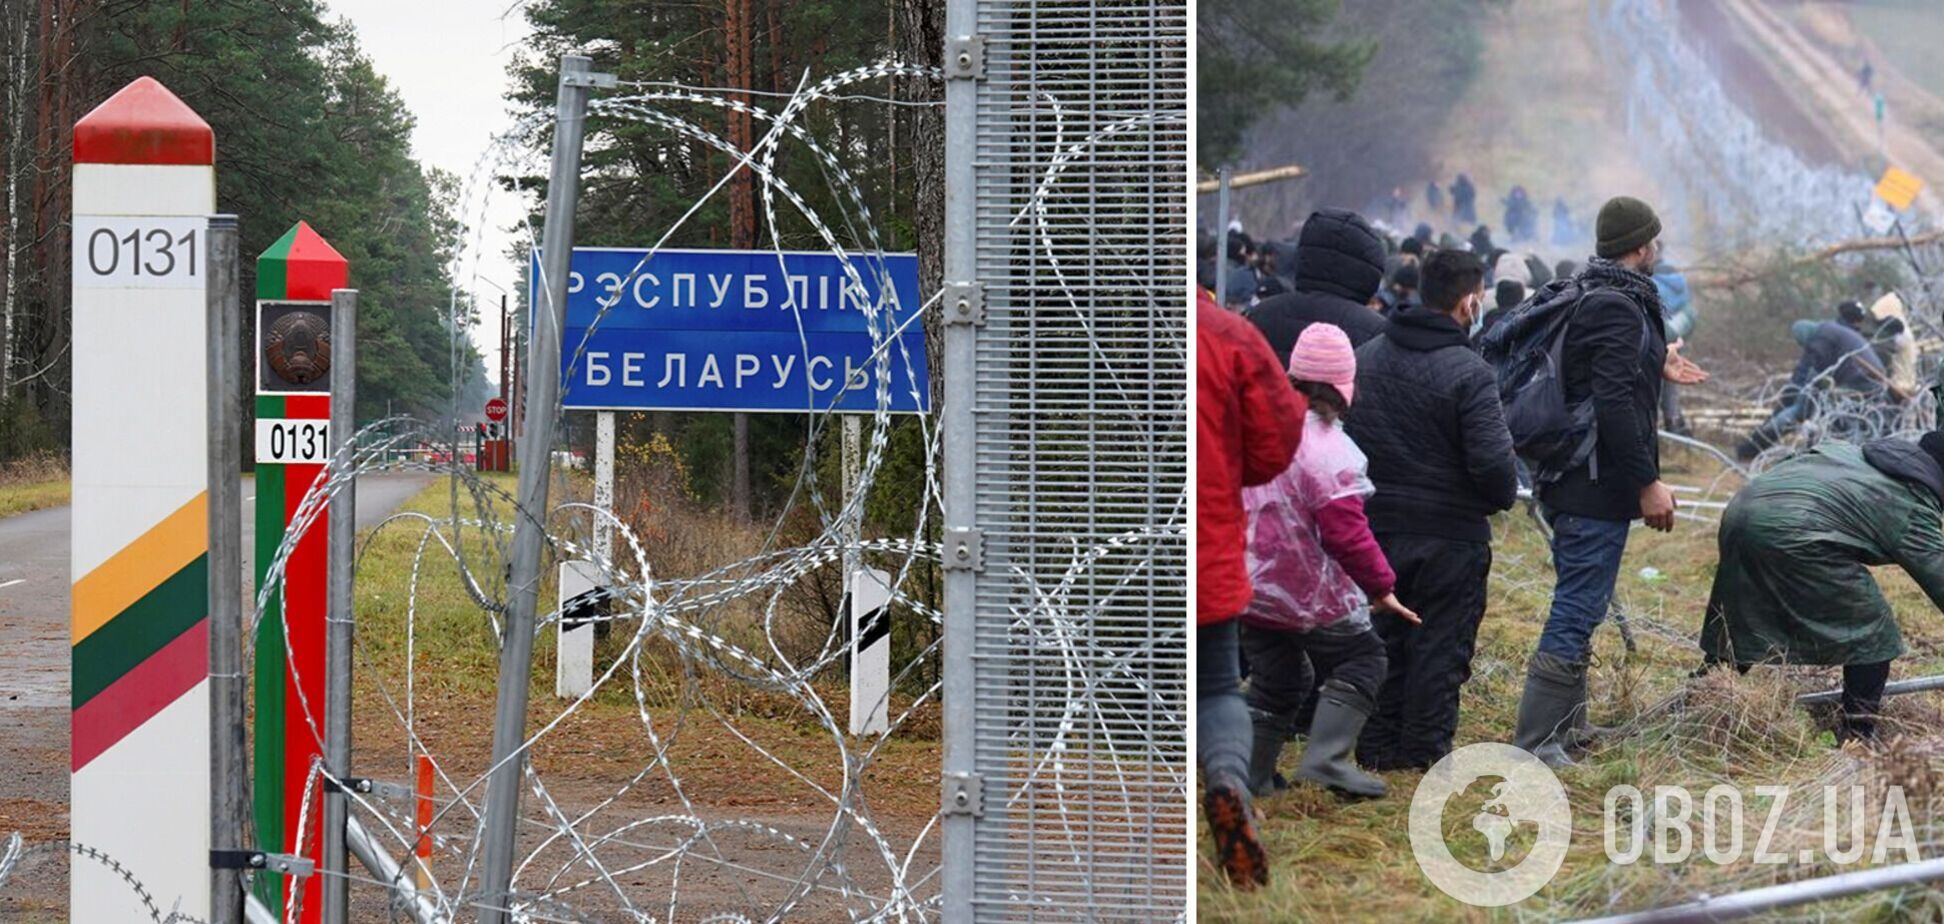 В Литве введут чрезвычайное положение из-за 'шантажа мигрантами' на границе